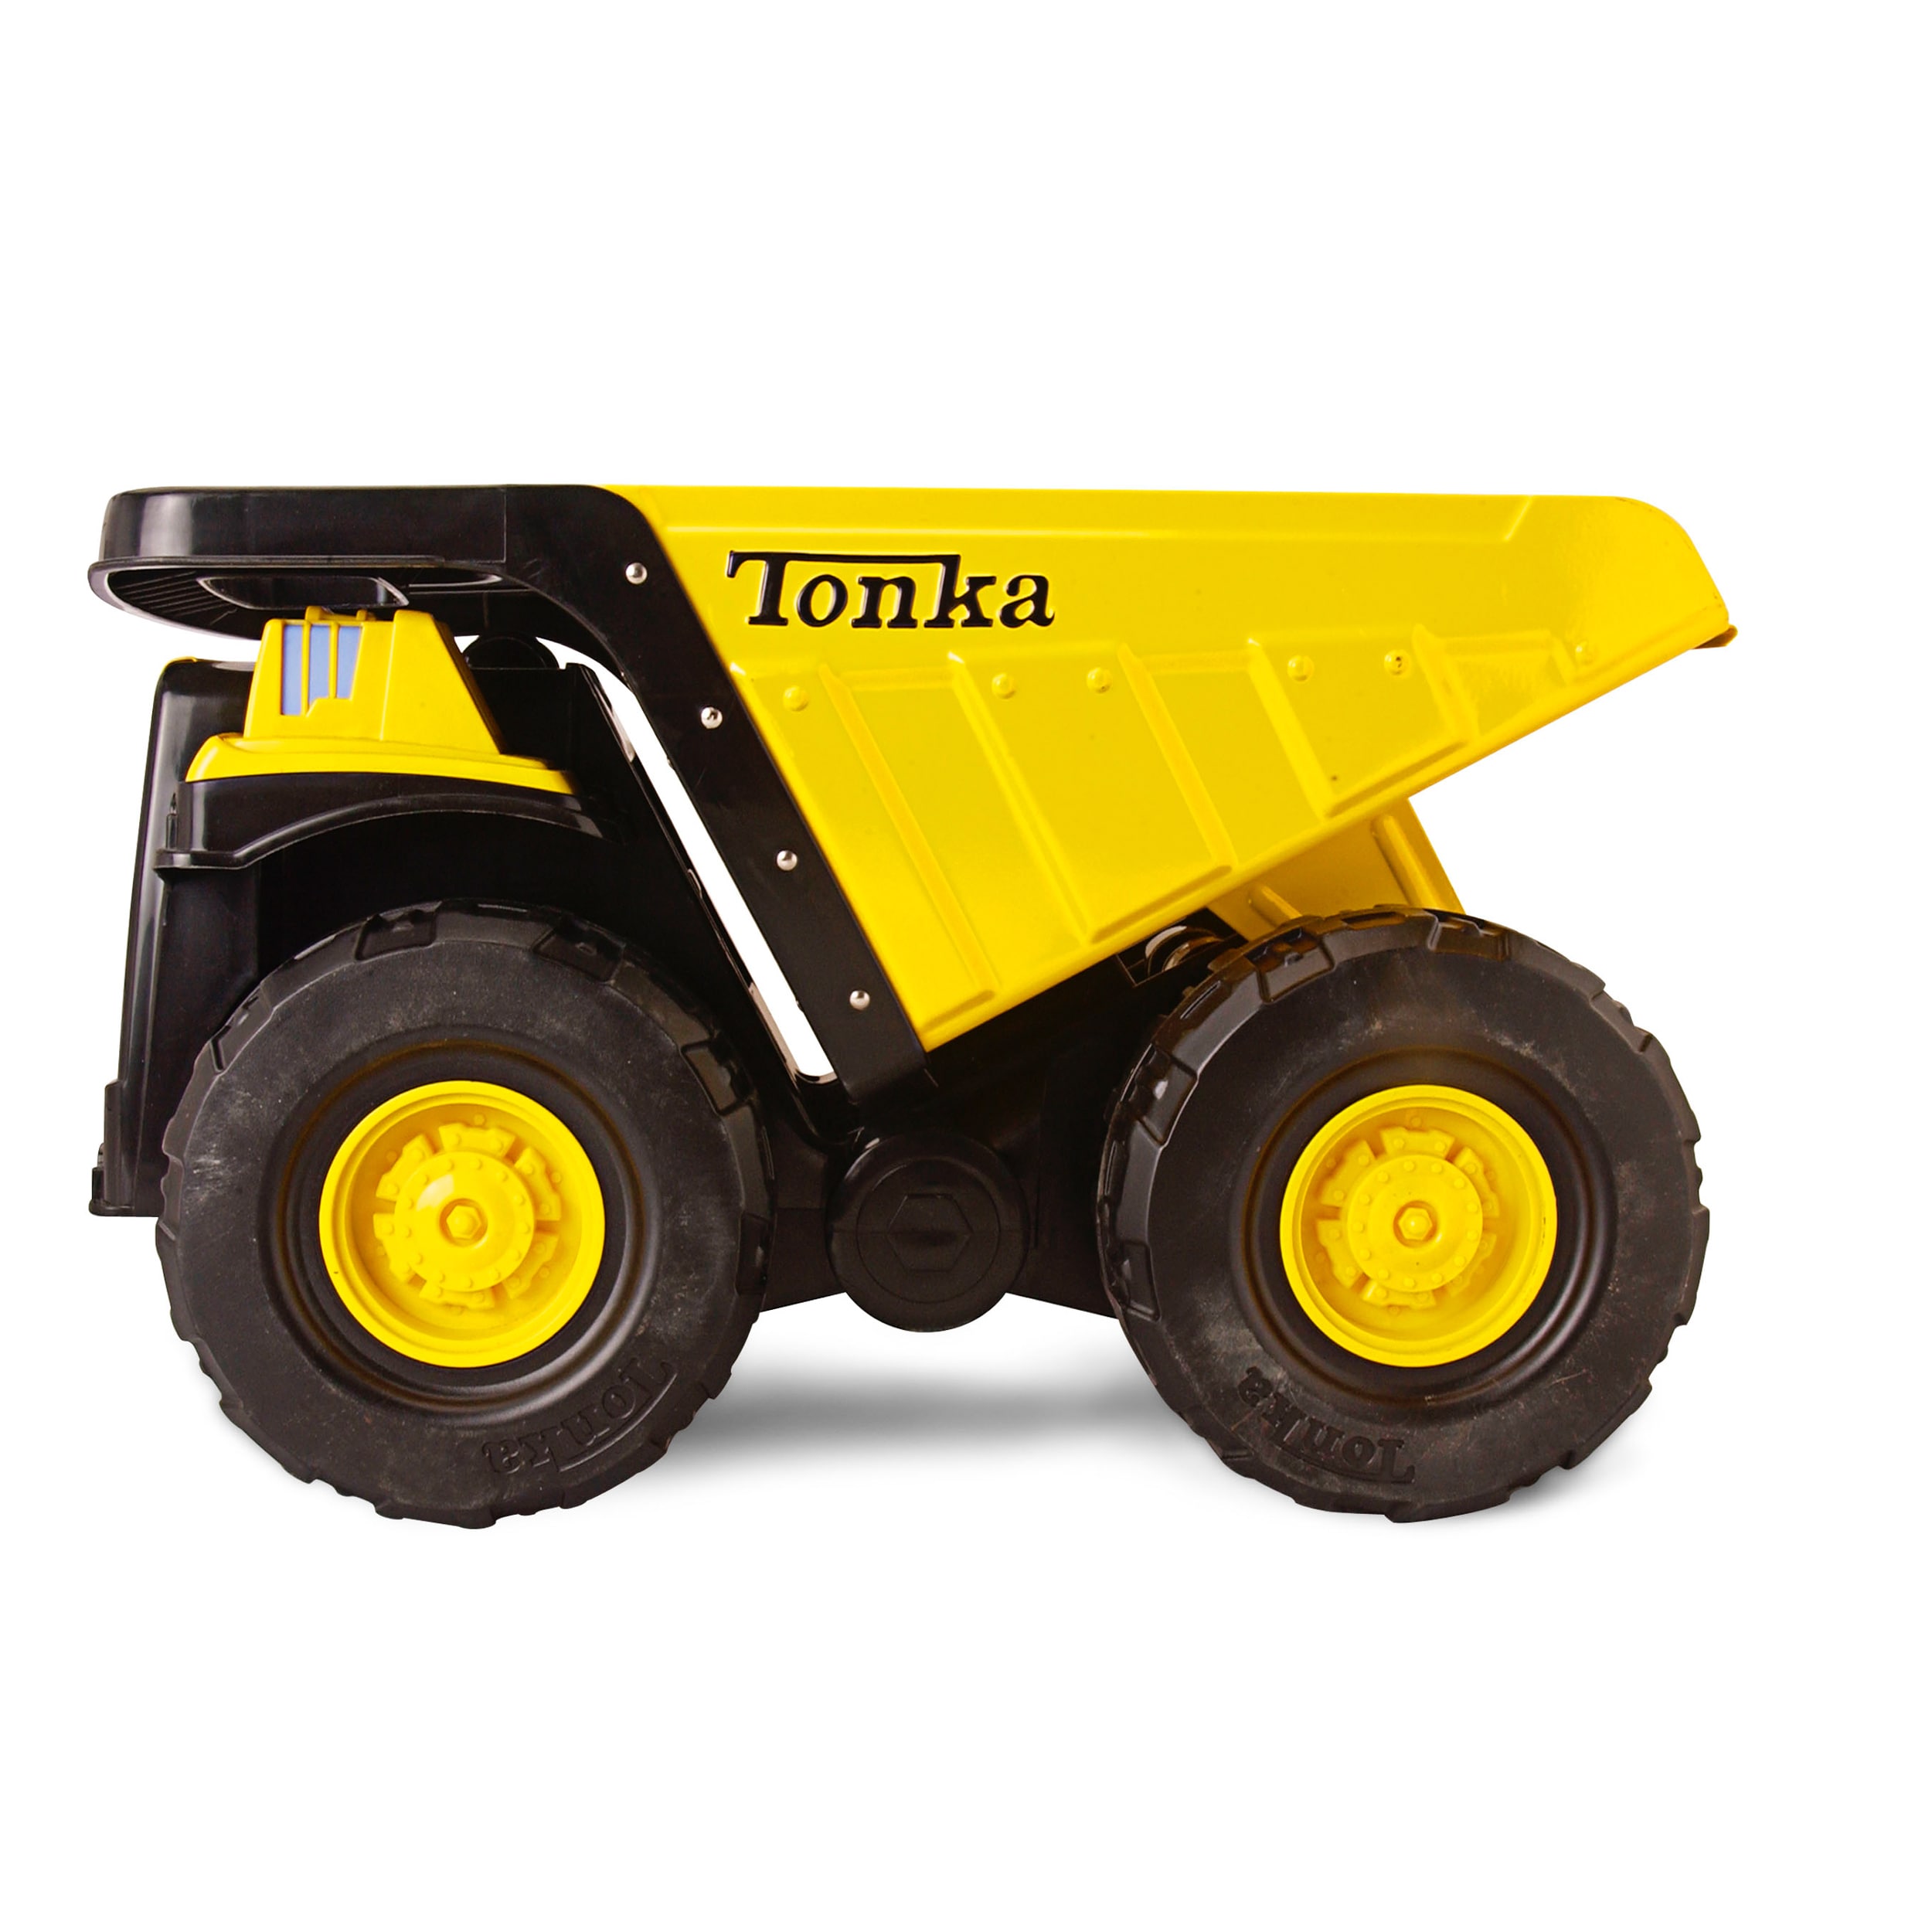 tonka toy trucks